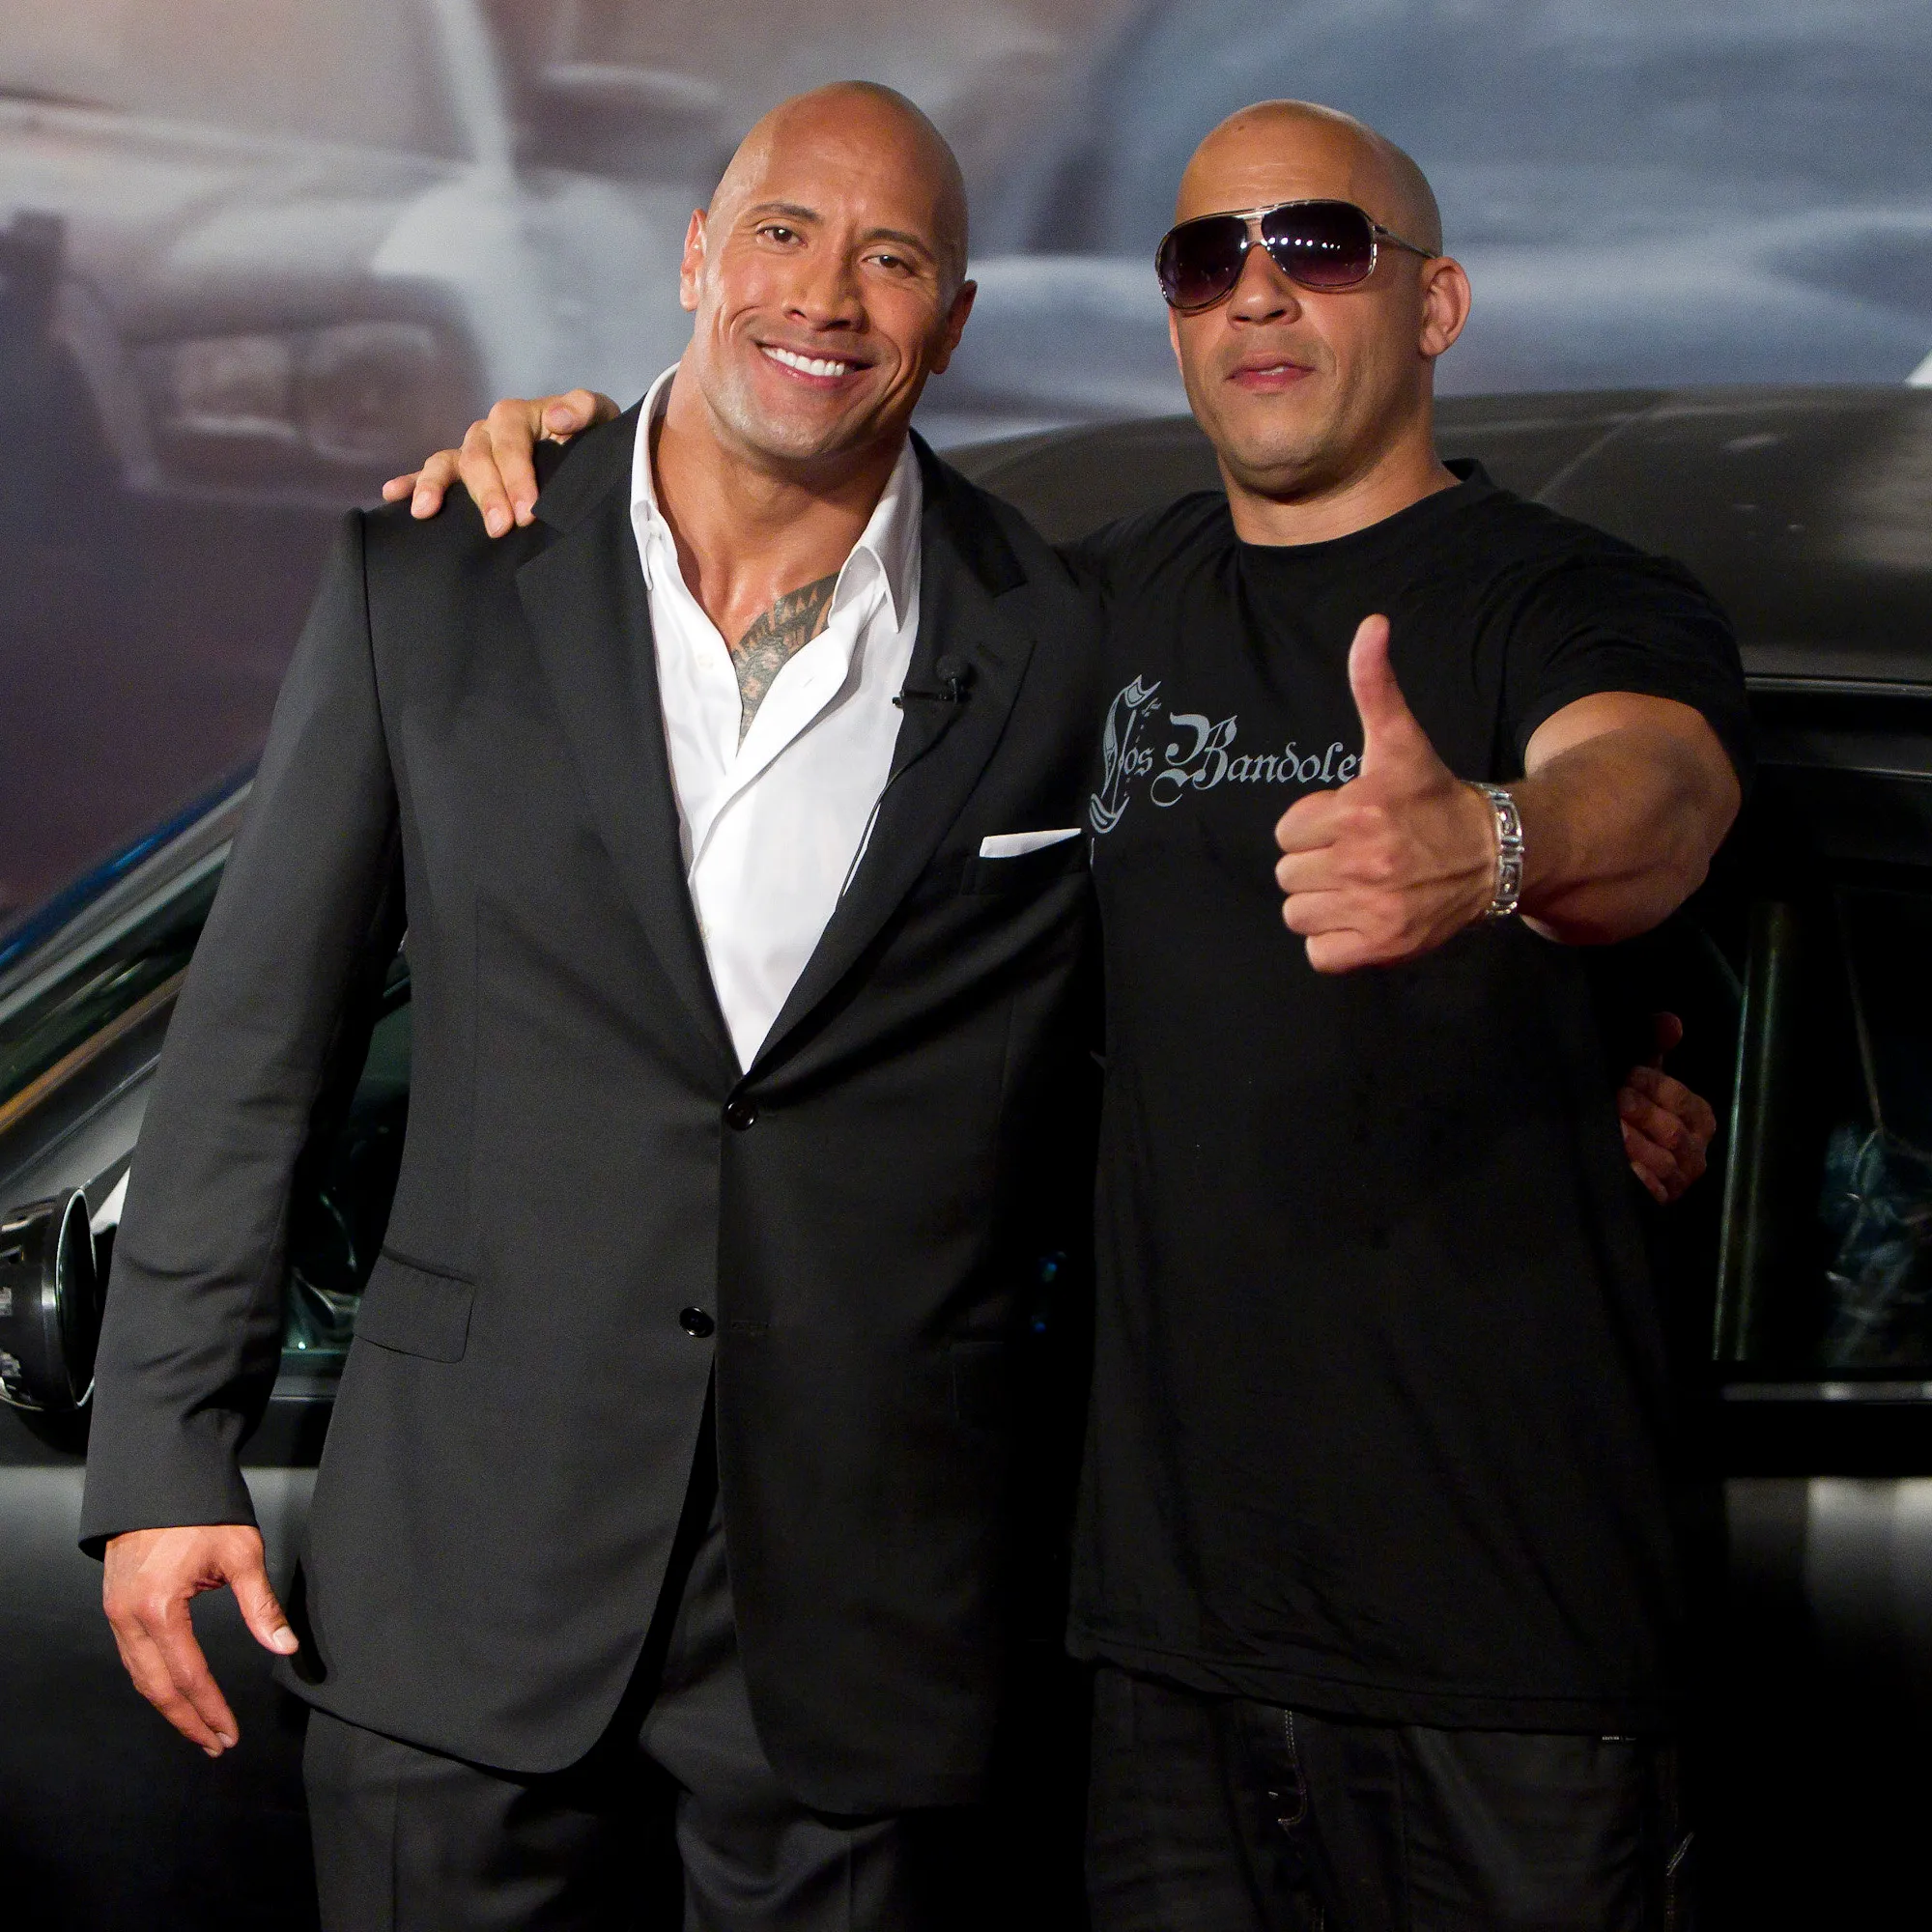 Vin Diesel and Dwayne Johnson